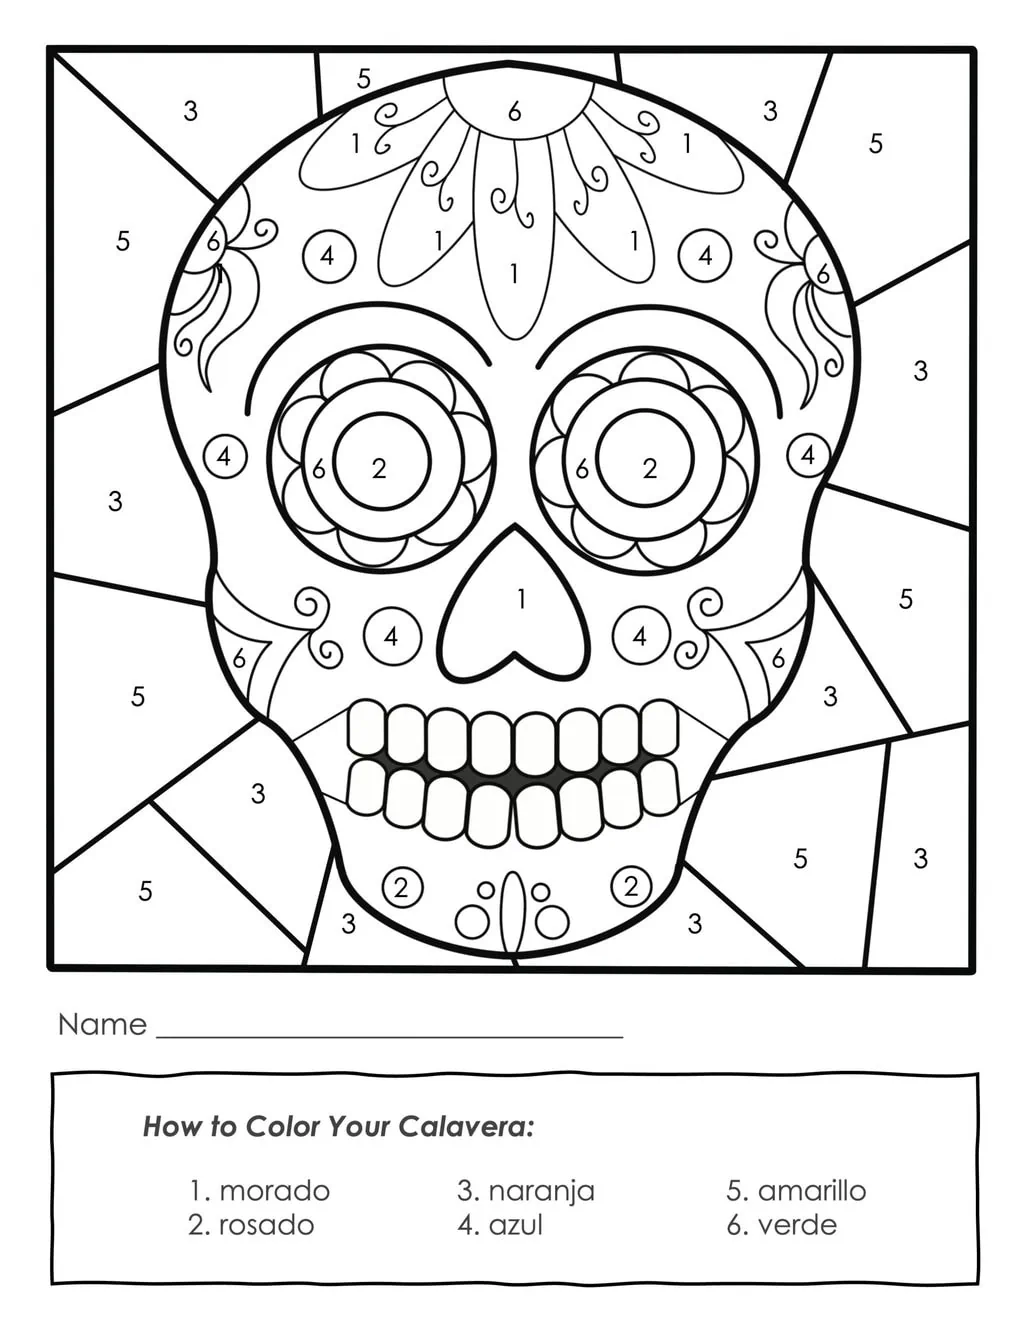 Sugar skull coloring pages and masks for dãa de muertos